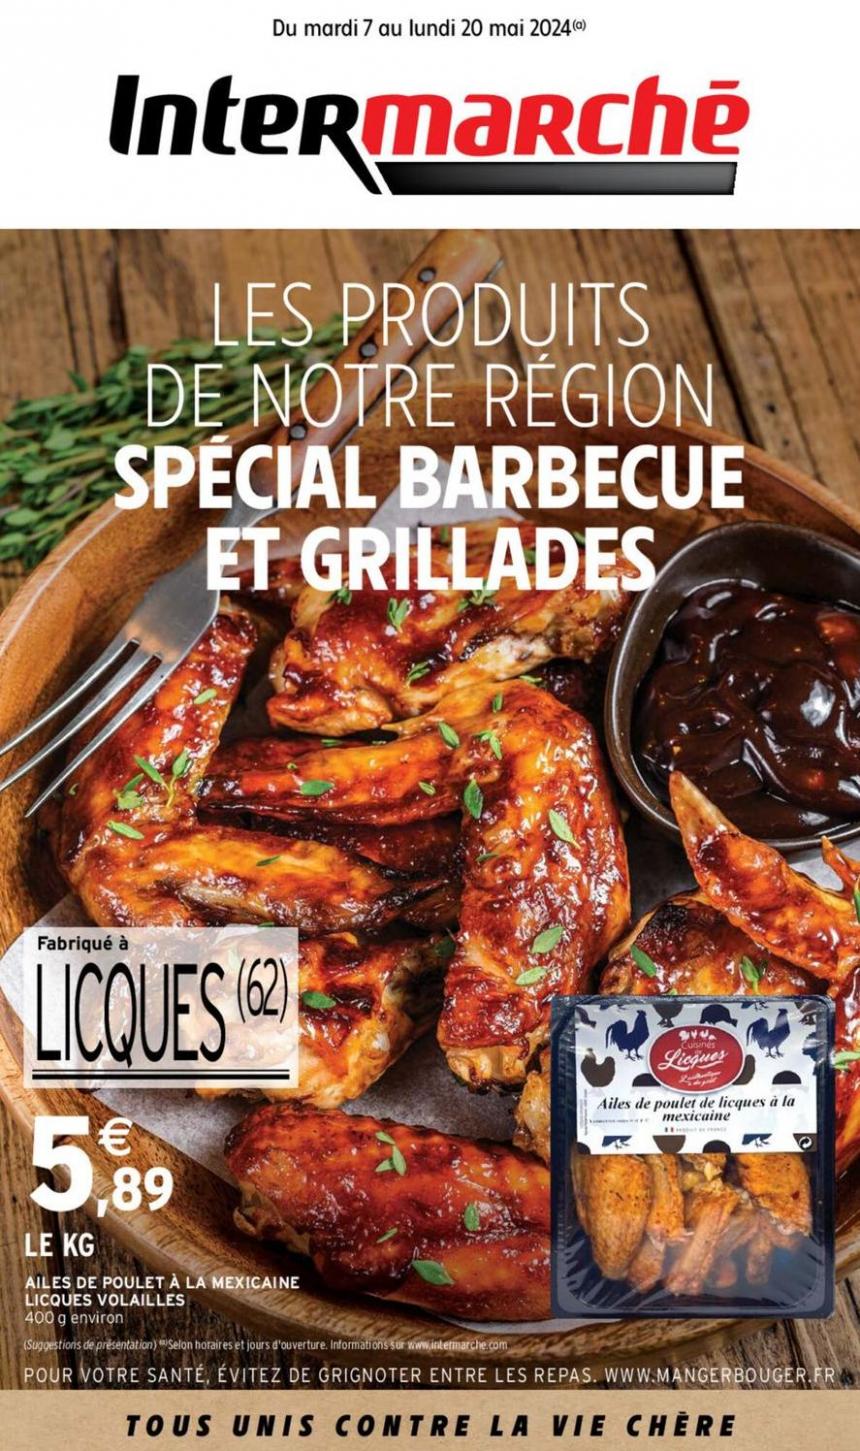 Les Profuits De Notre Region Special Barbecue Et Grillades. Intermarché (2024-05-20-2024-05-20)